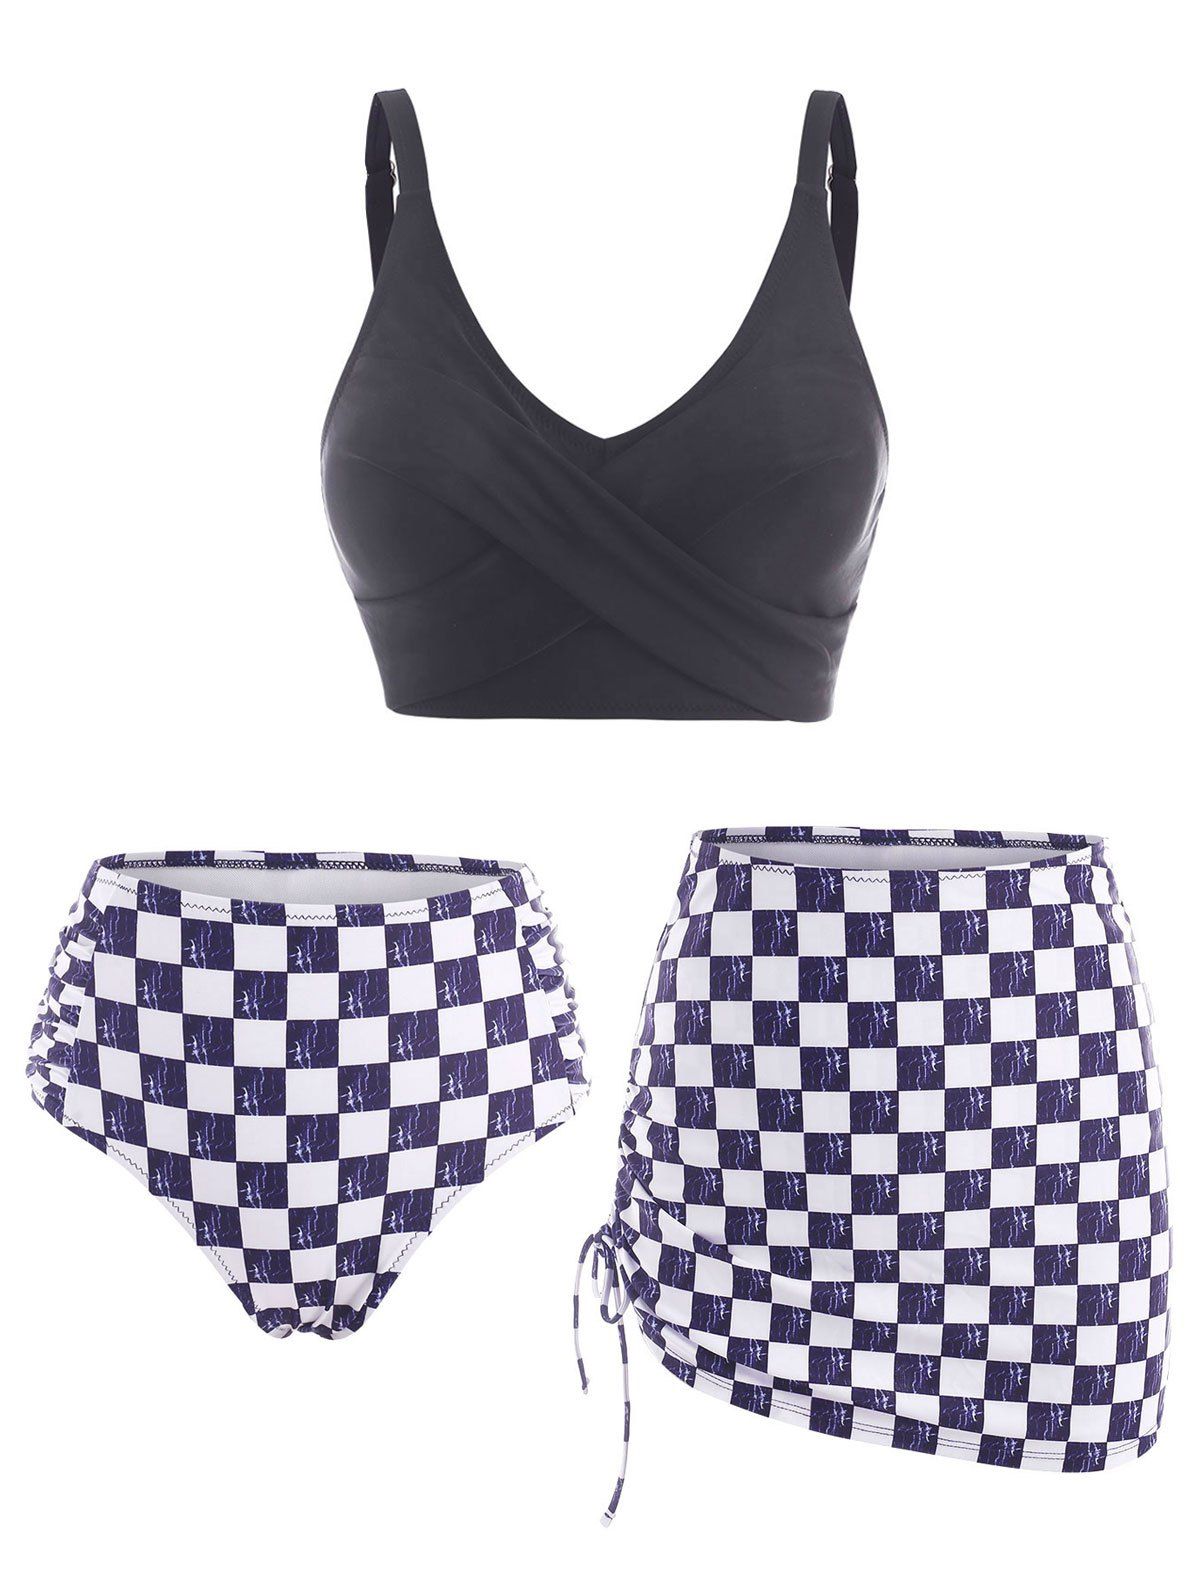 Checkered Crisscross Ruched Cinched Three Piece Tankini Swimwear - BLACK L